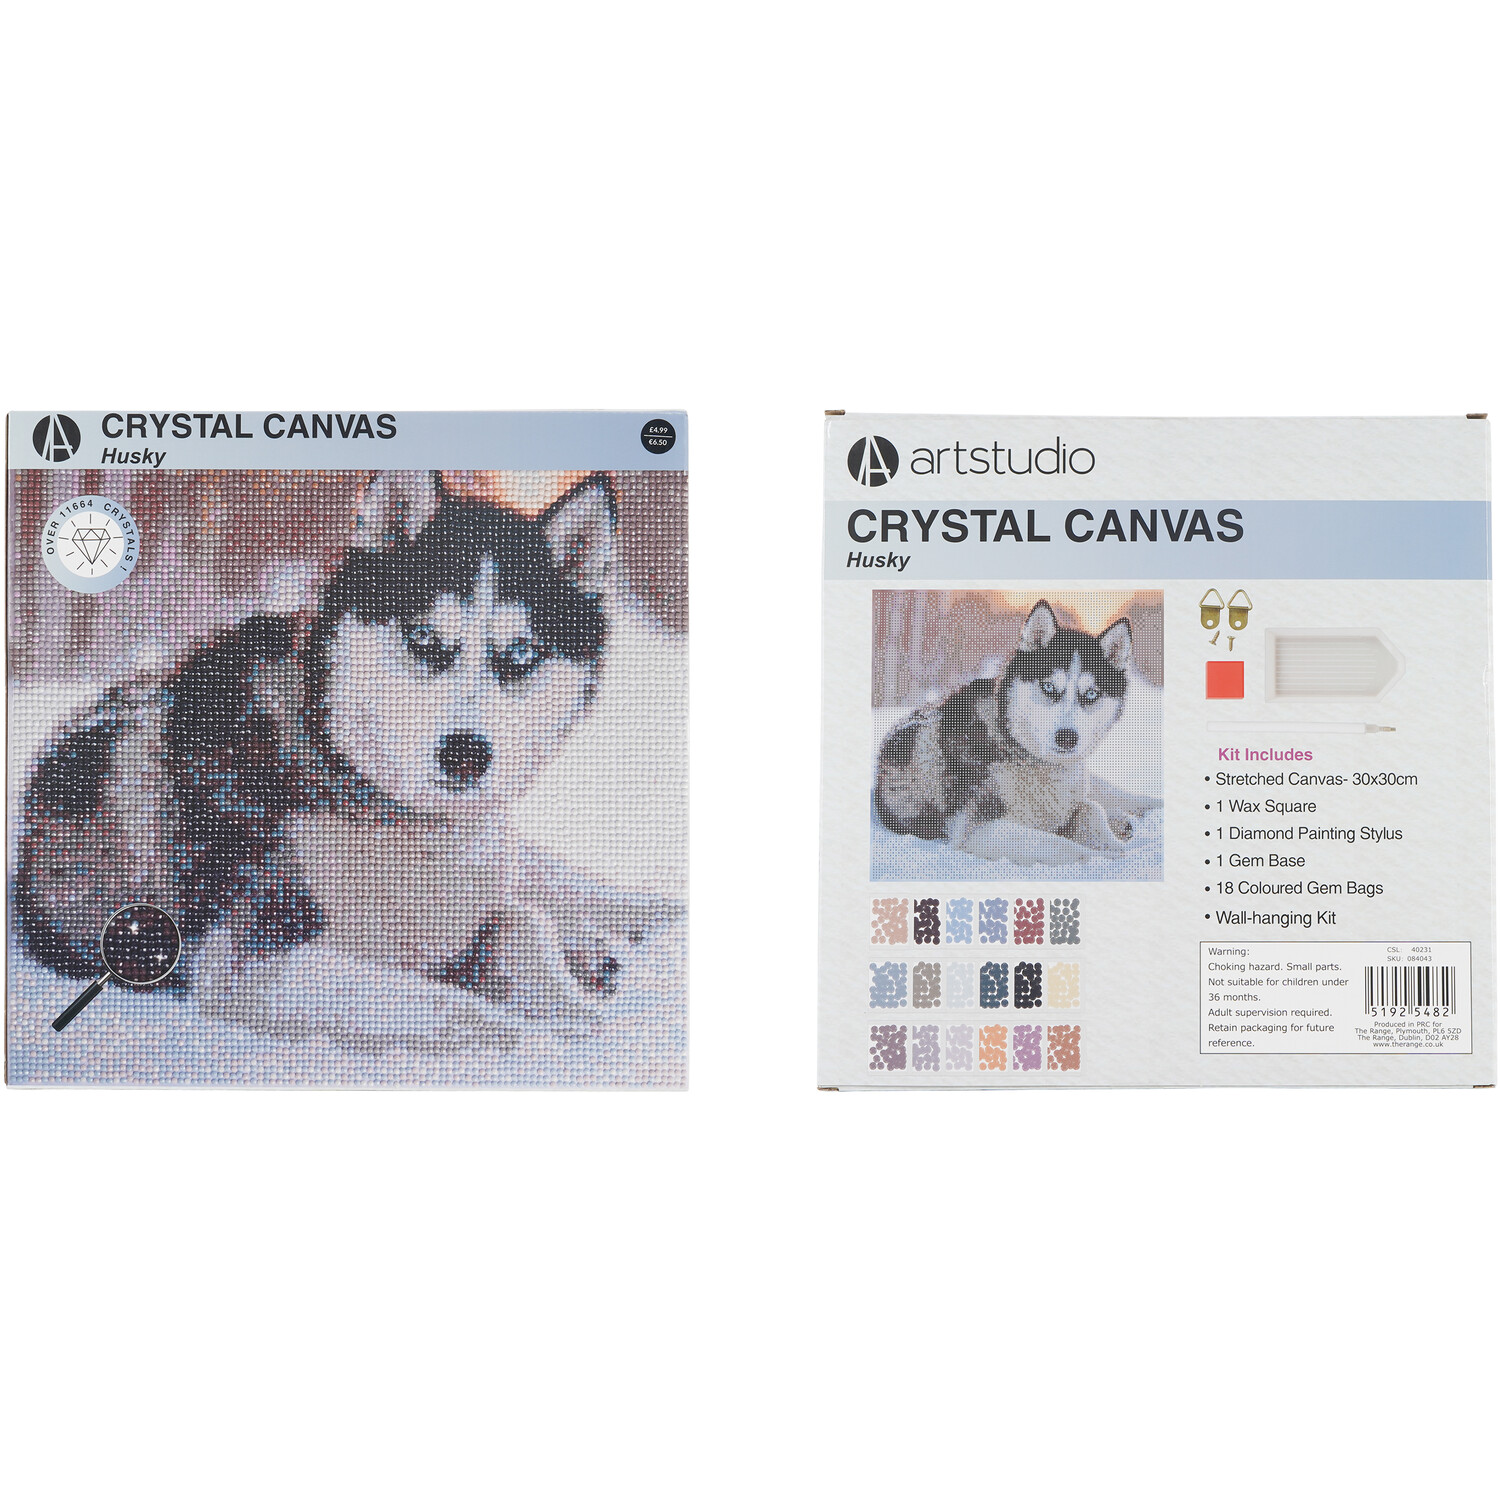 Crystal Canvas Tiger or Husky Image 5